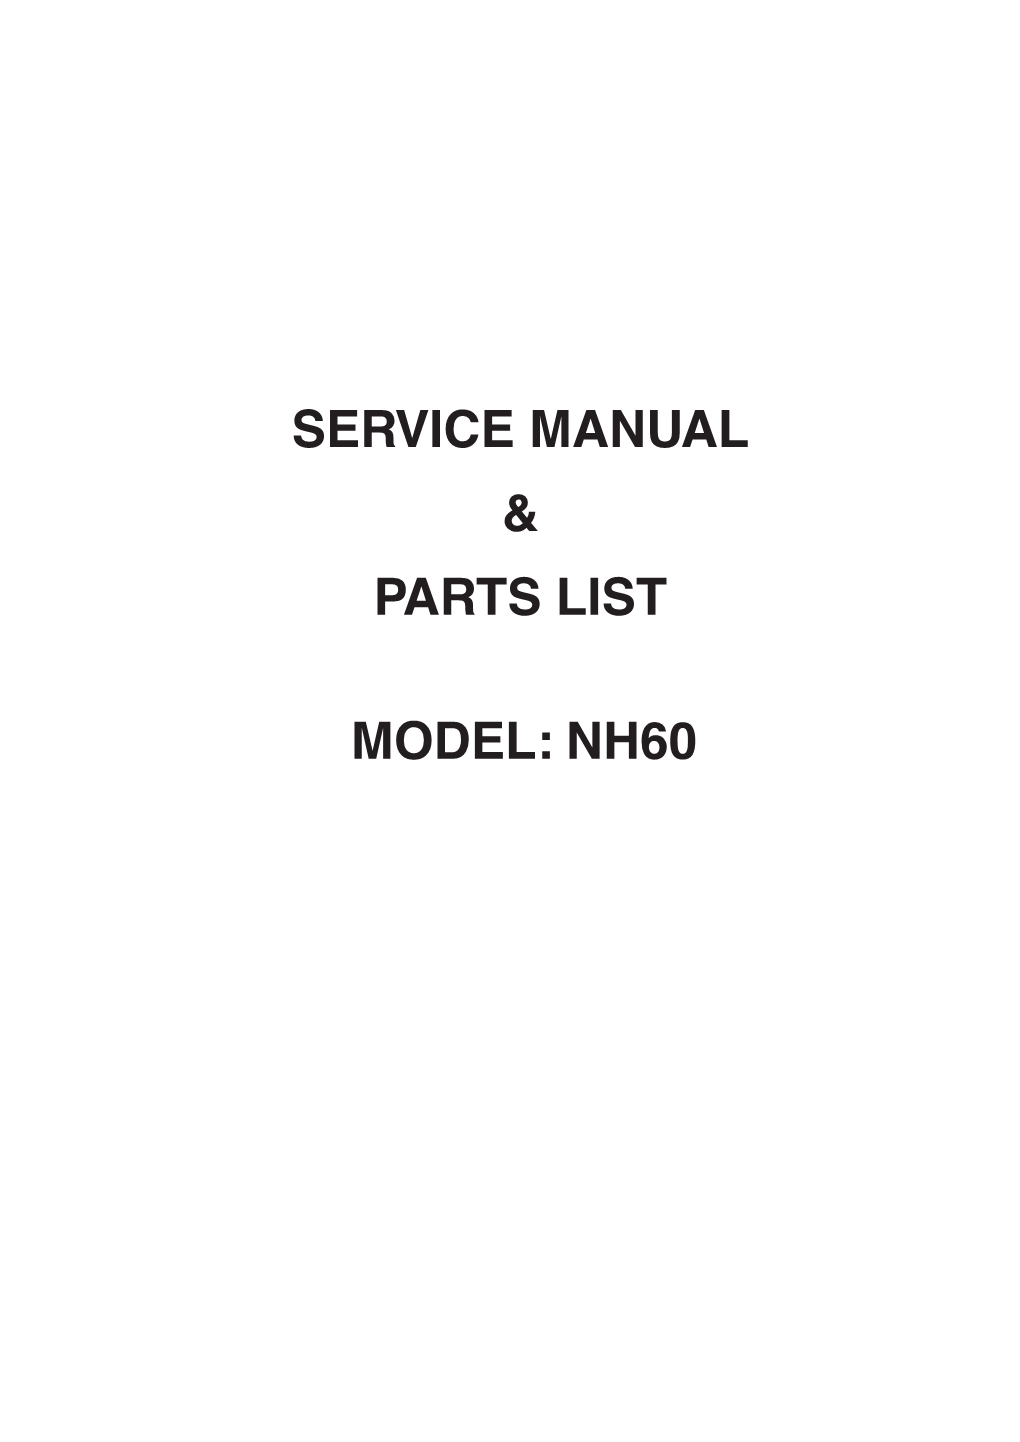 Service Manual & Parts List Model: Nh60